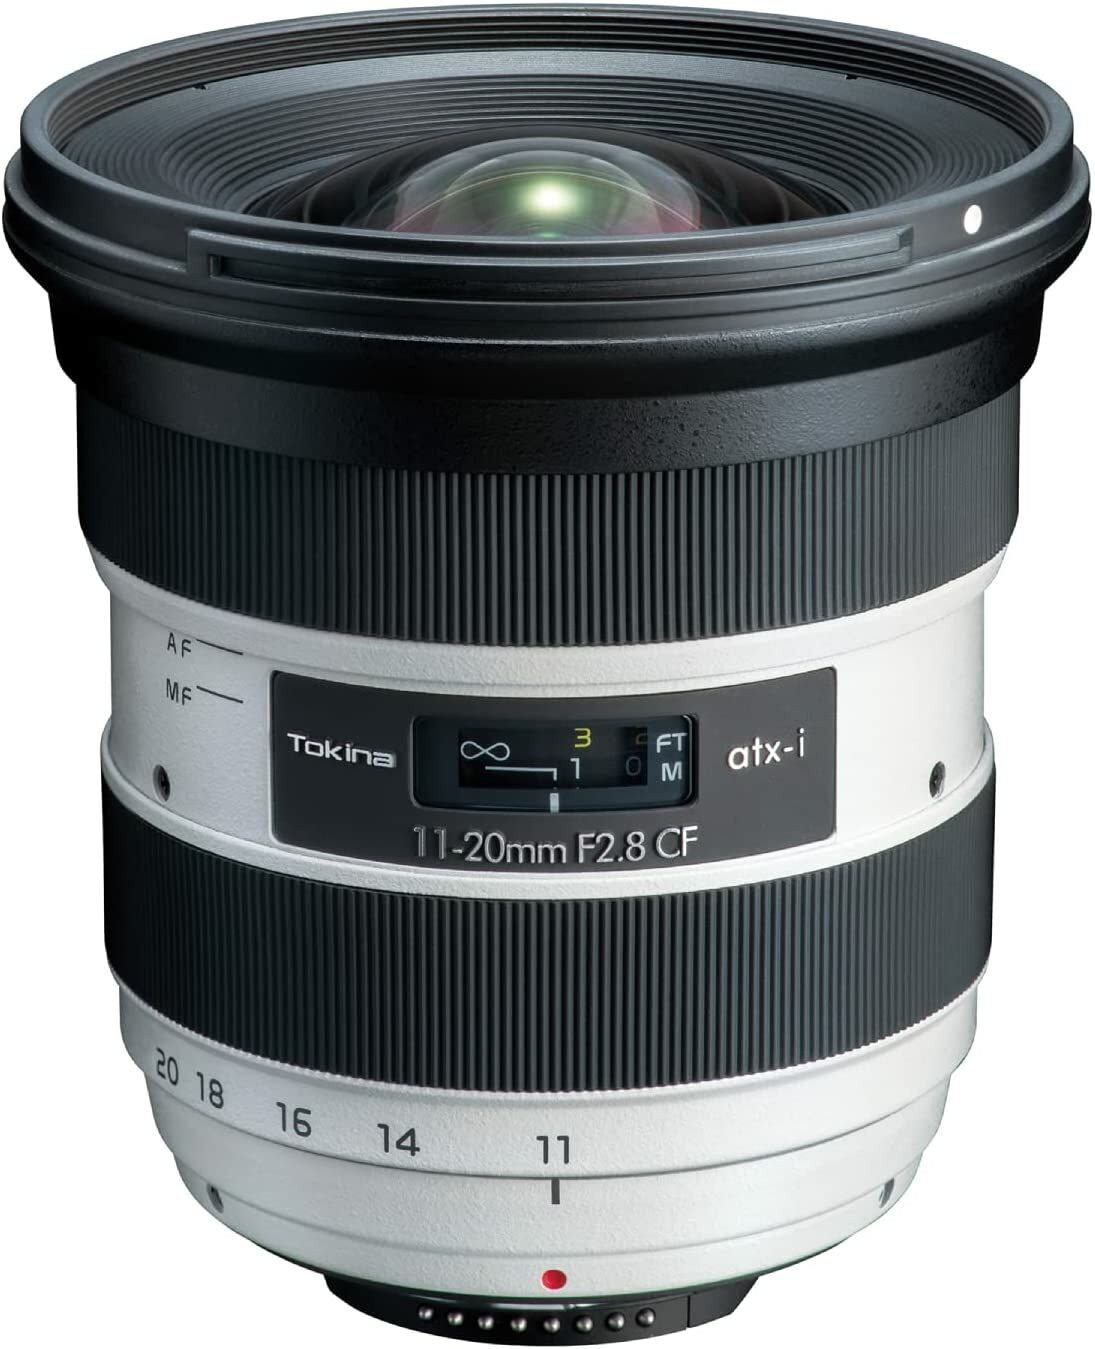 Tokina ATX-i 11-20mm f/2.8 CF Lens (Canon EF) (White Edition)